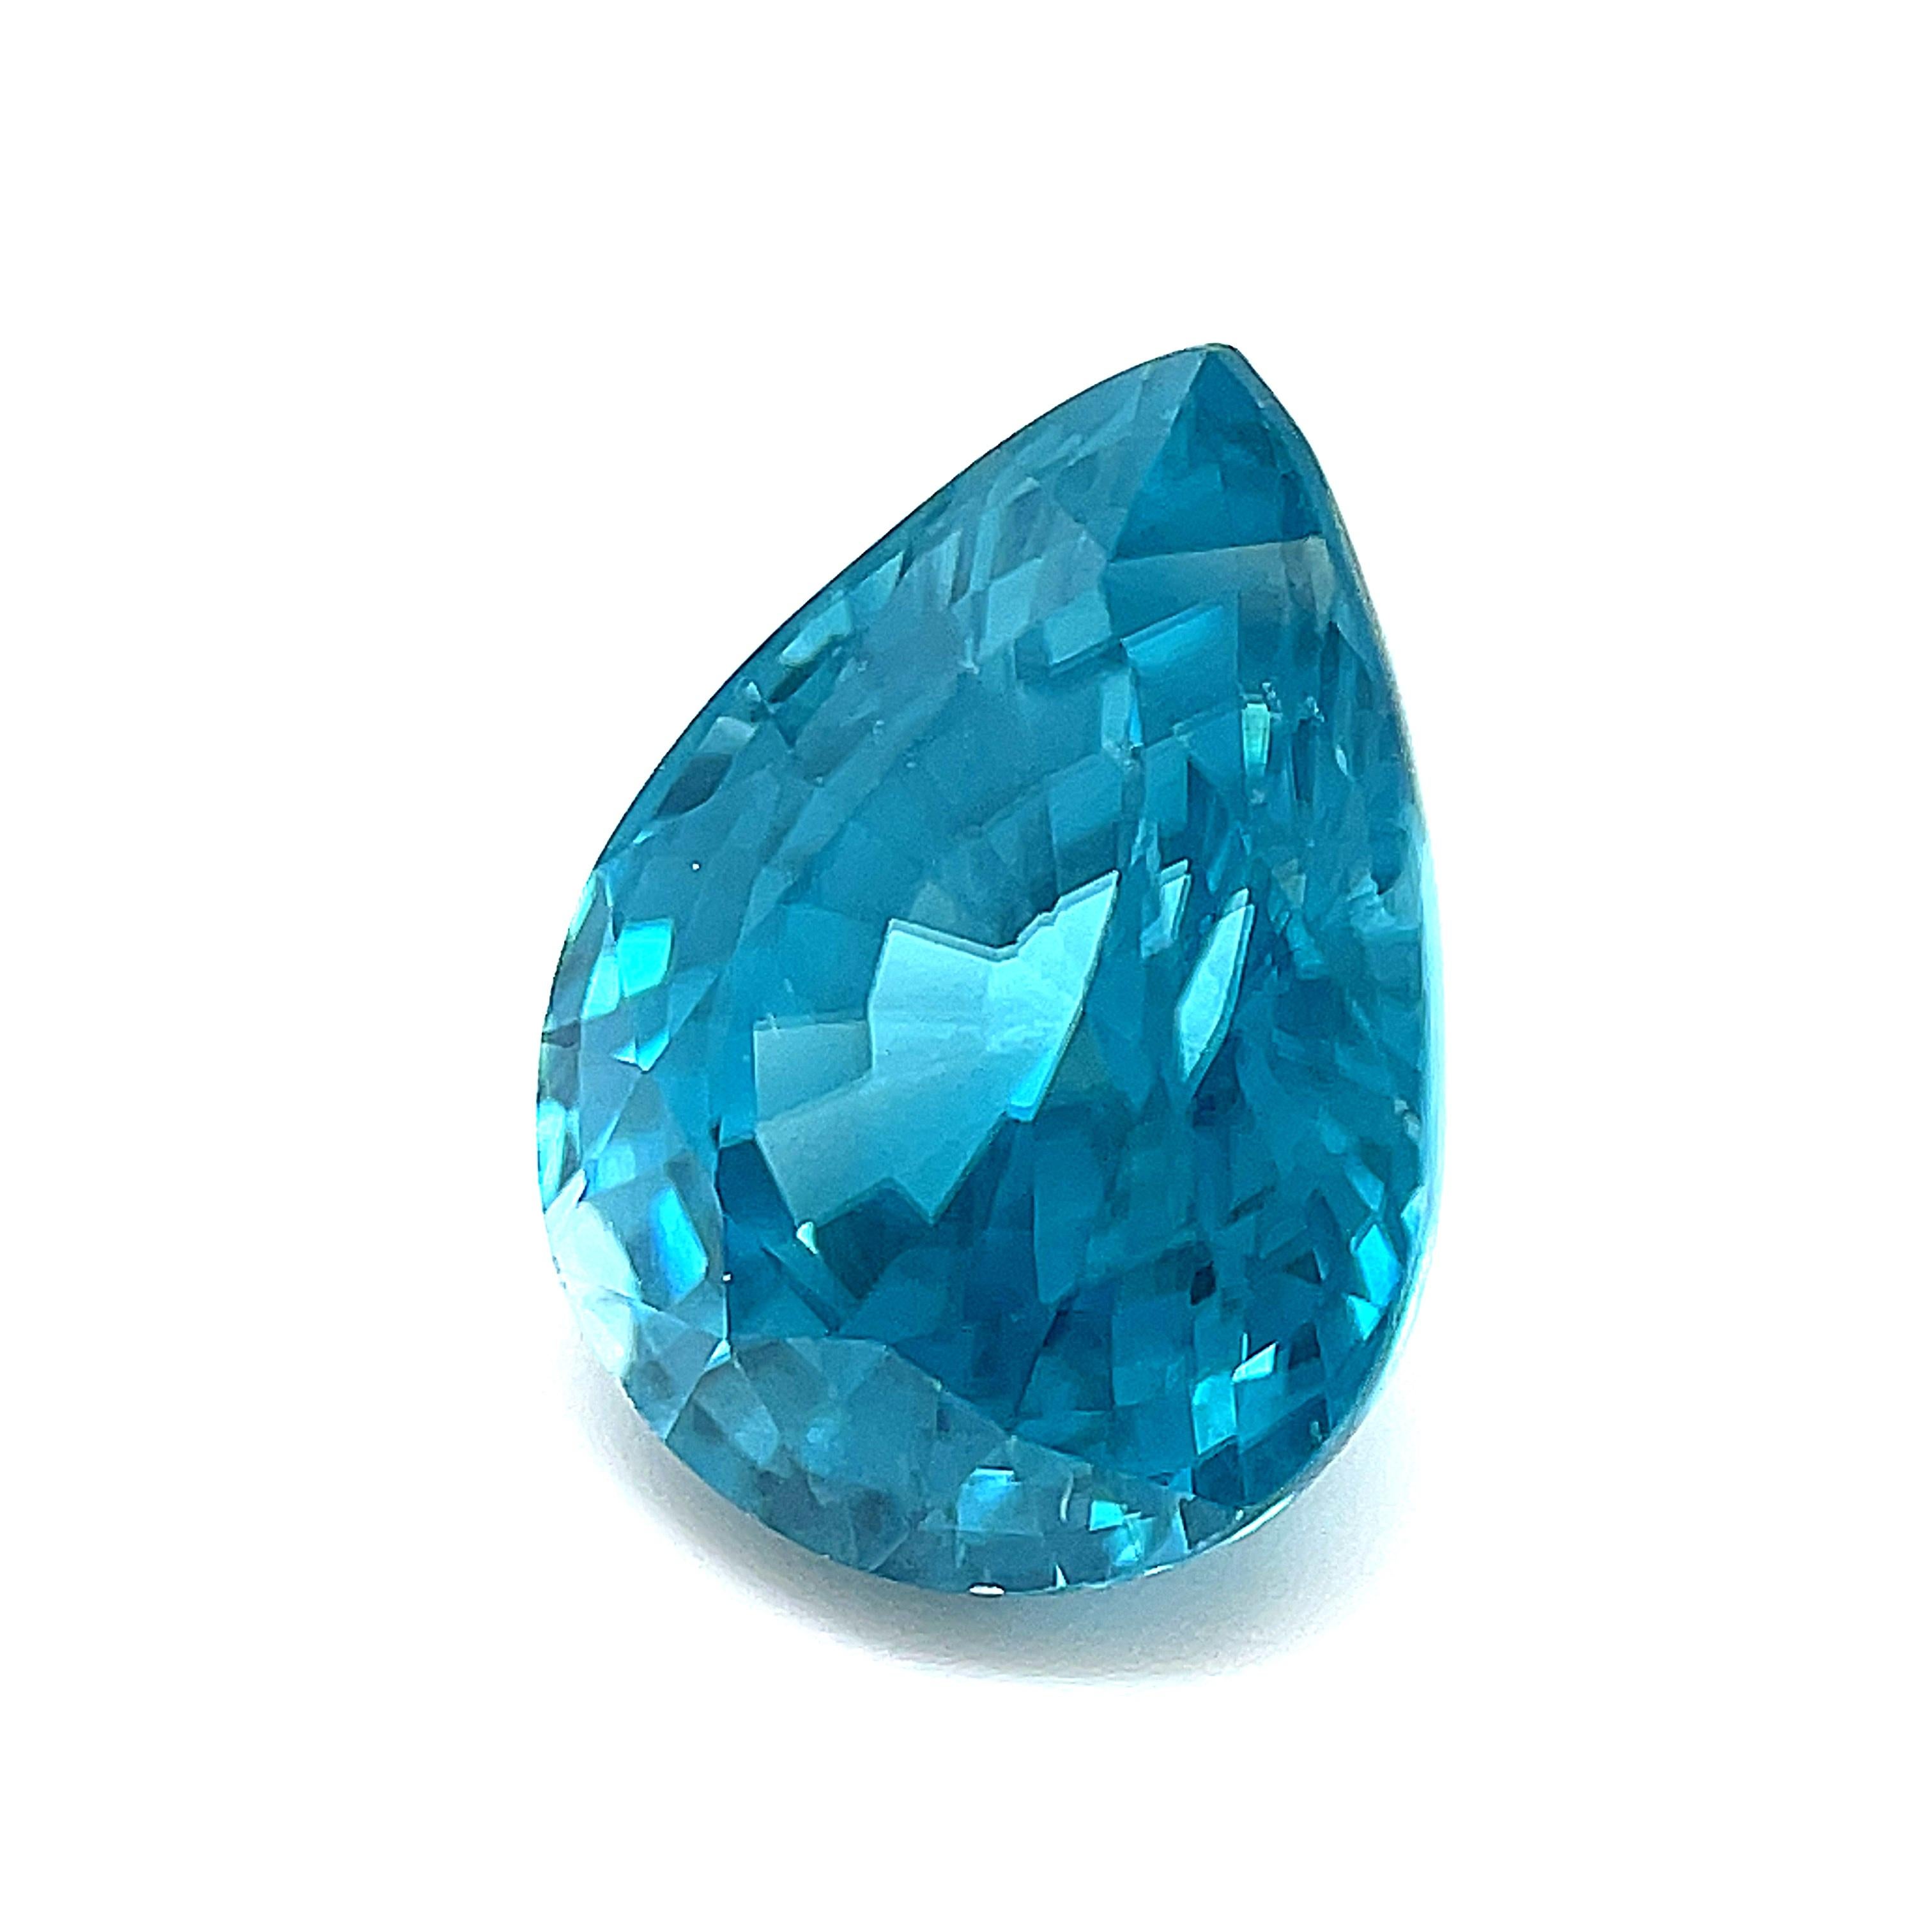 Women's or Men's 4.72 Carat Pear Shaped Blue Zircon, Unset Loose Gemstone  For Sale